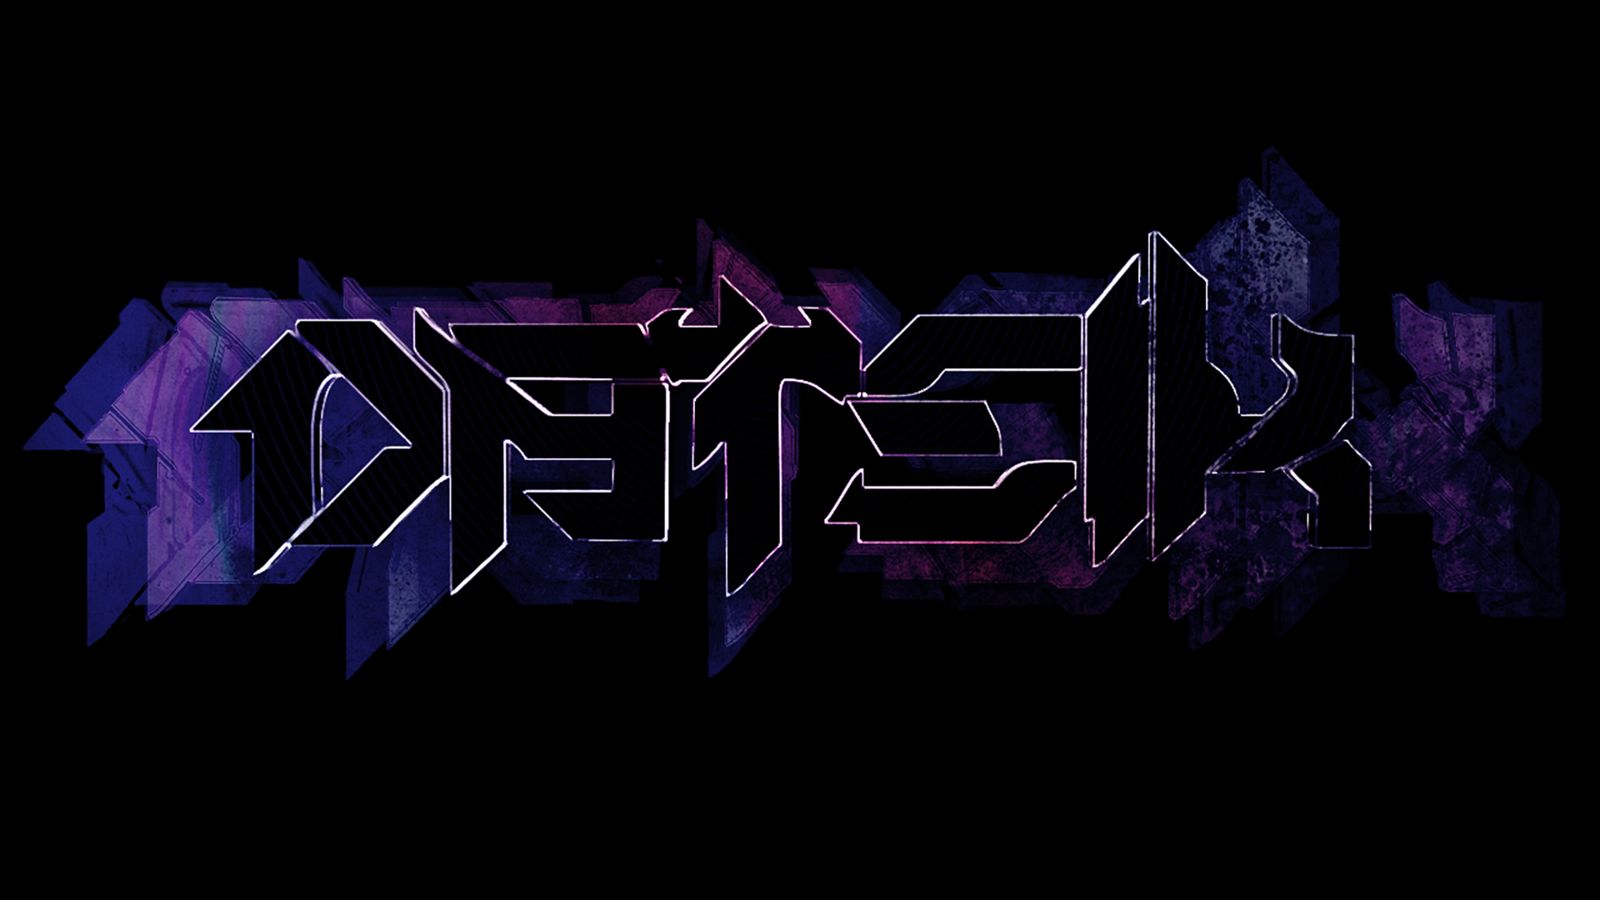 Datsik [Wallpaper] 1080p 16:9 [PNG!] by Semifinal on DeviantArt